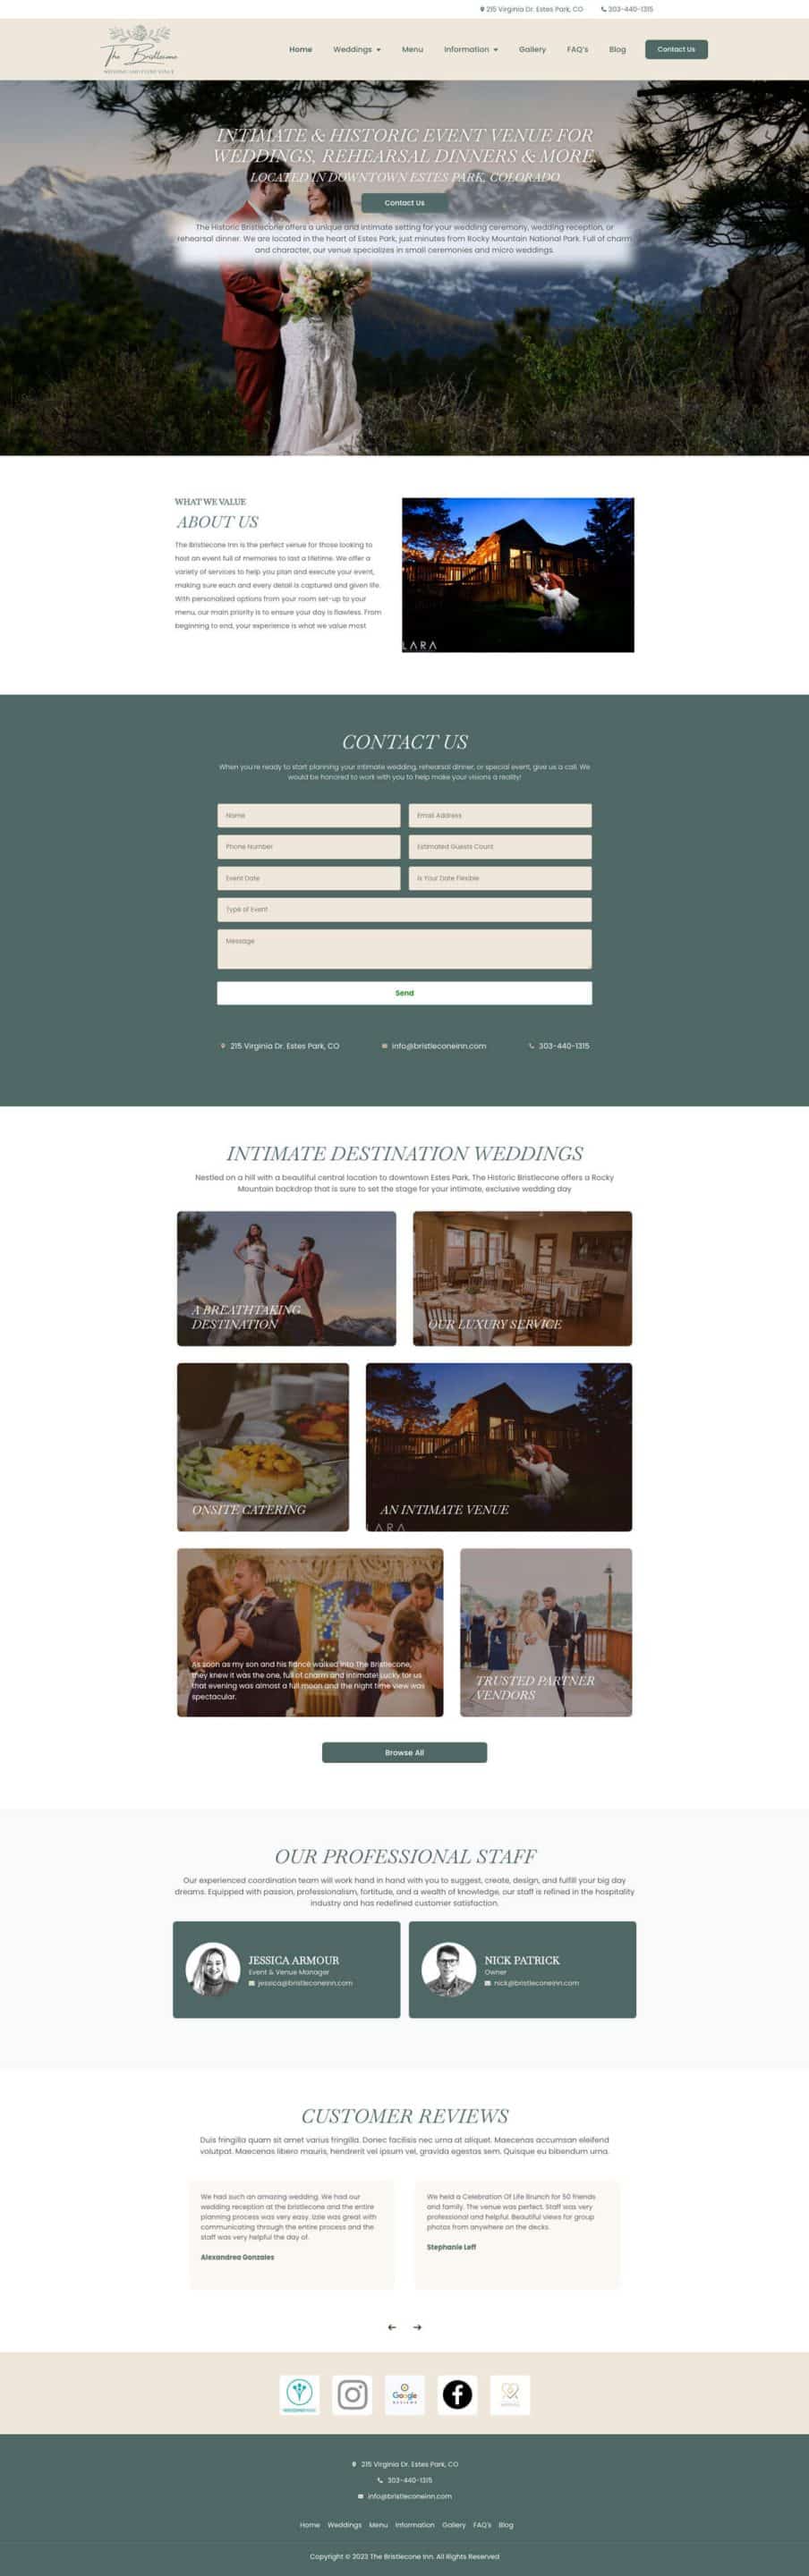 Bristlecone-Inn-Fullpage-Screenshot